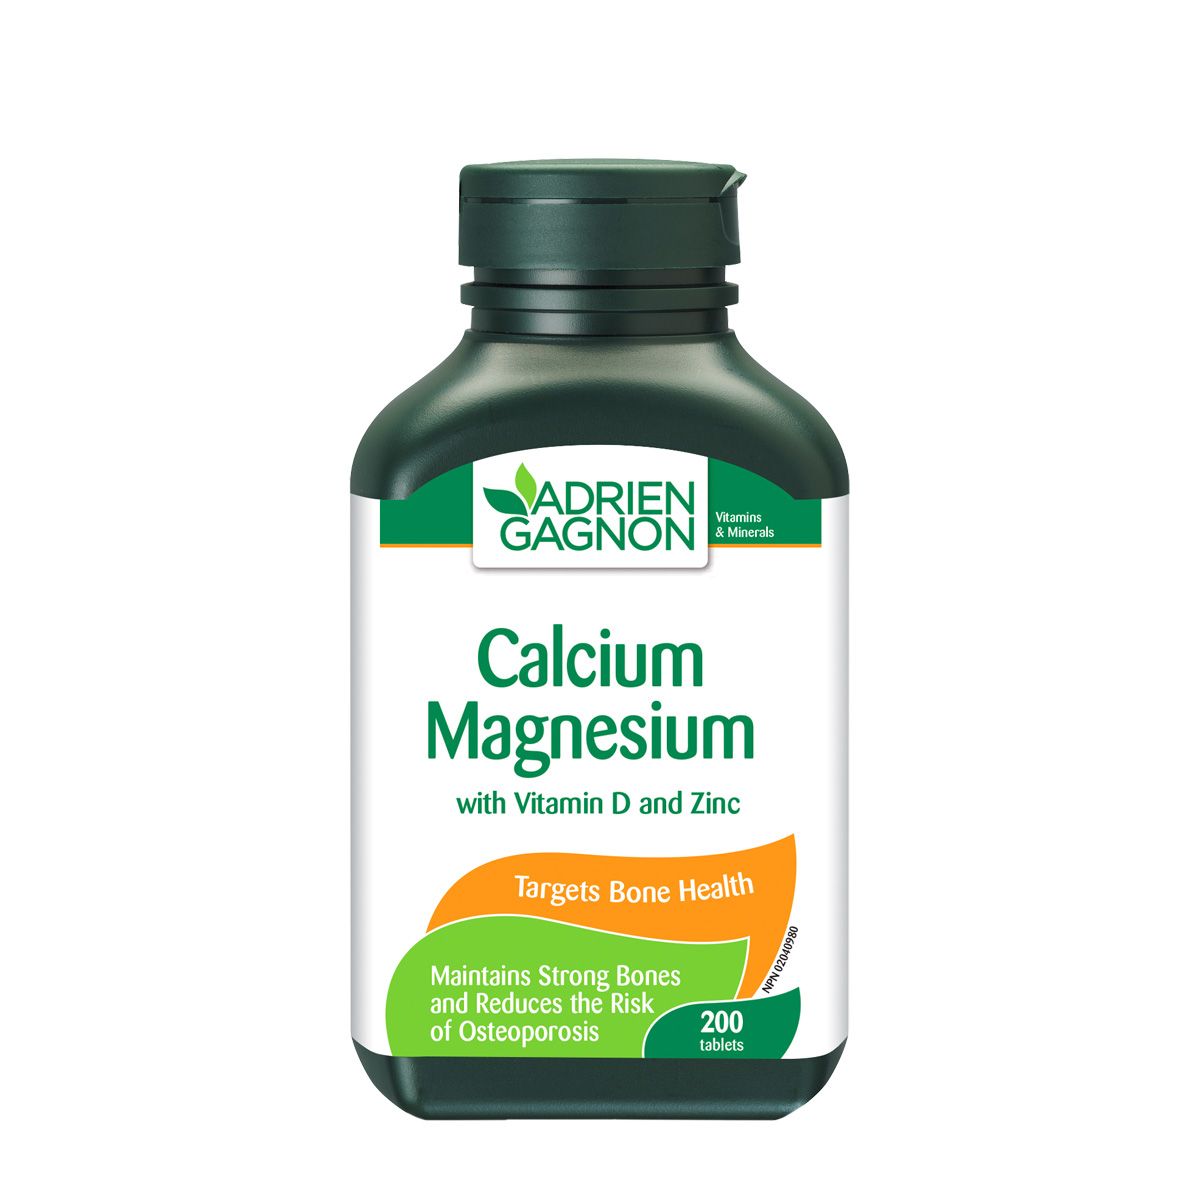 Кальциум Магнезиум. Витастандарт кальций магний. Calcium, Magnesium and Minerals chemic. Супер кальций магний.